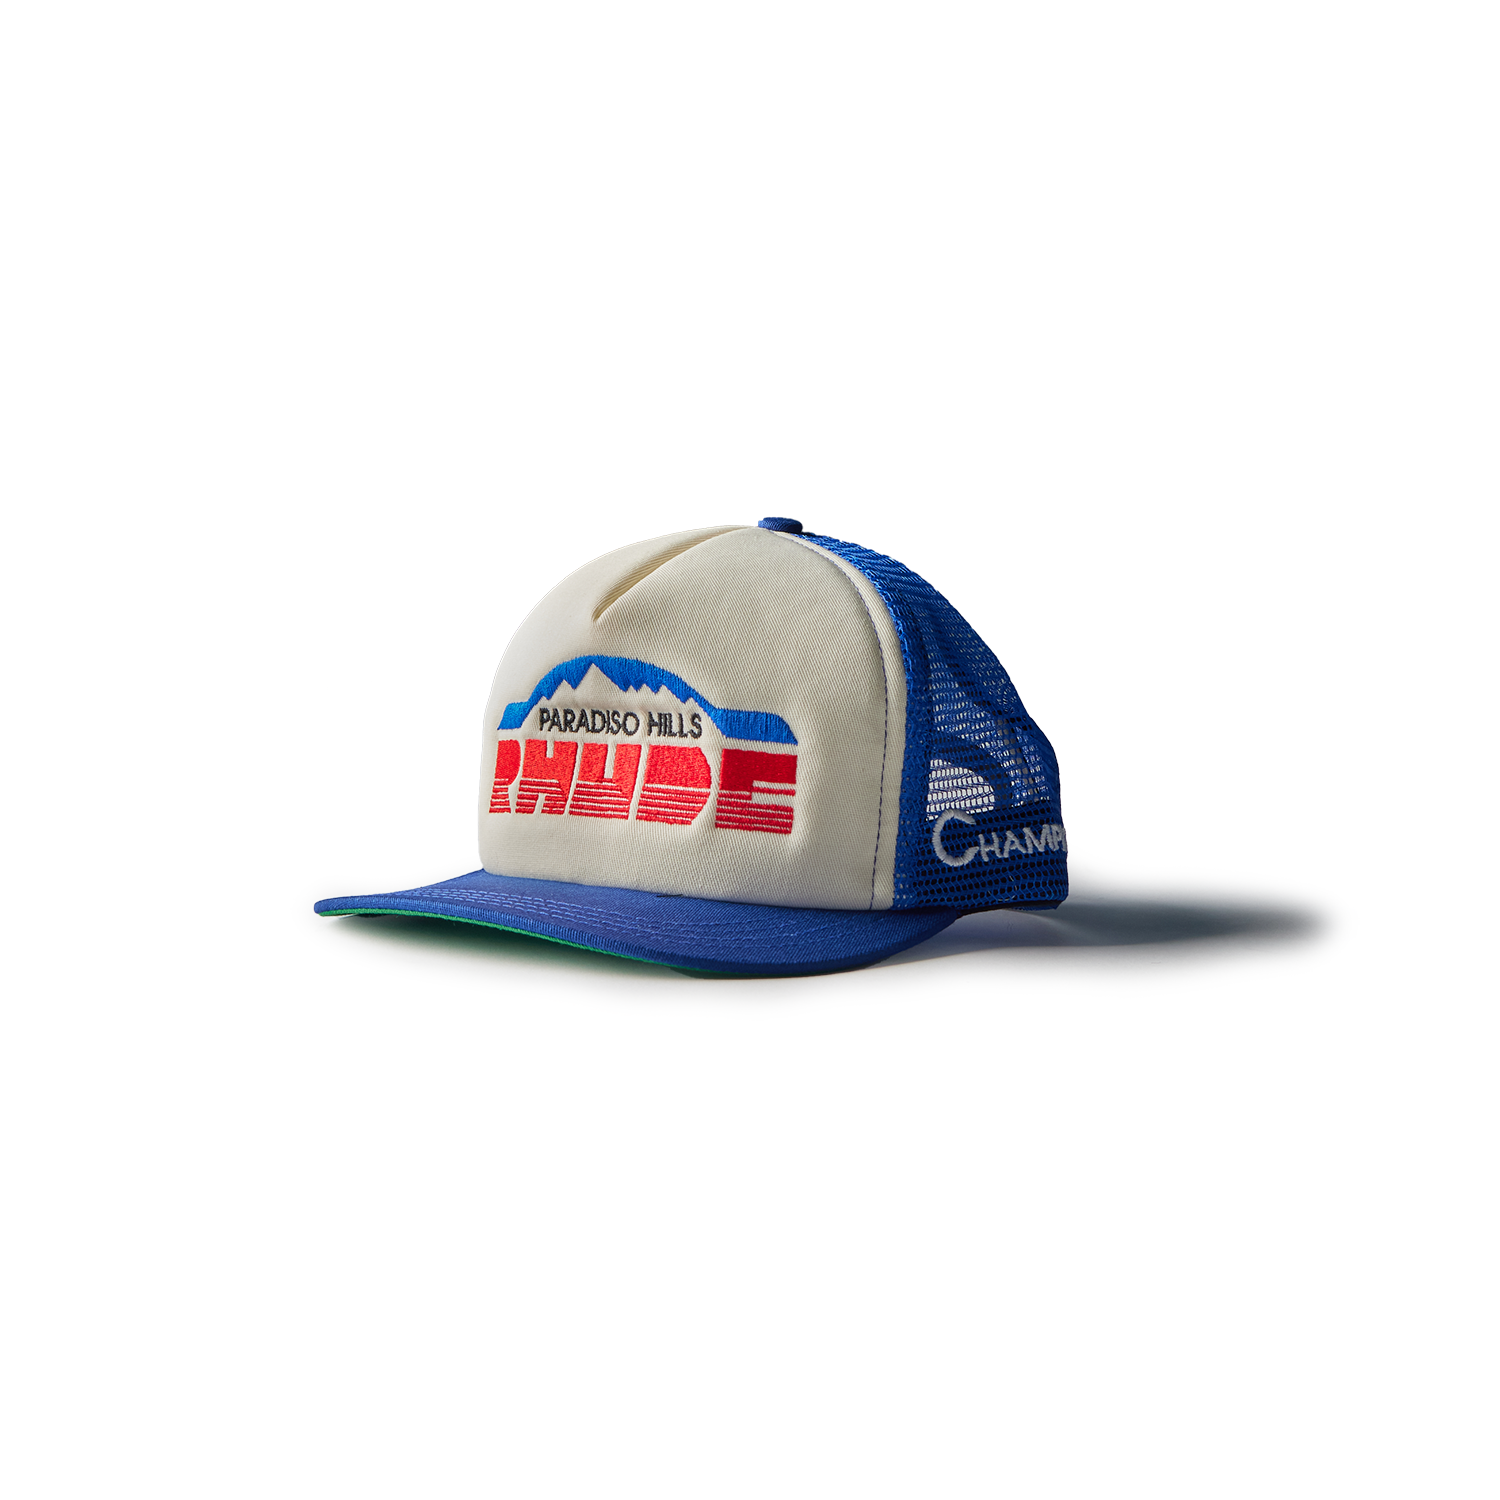 RHUDE - Paradiso Hills Trucker Hat product image